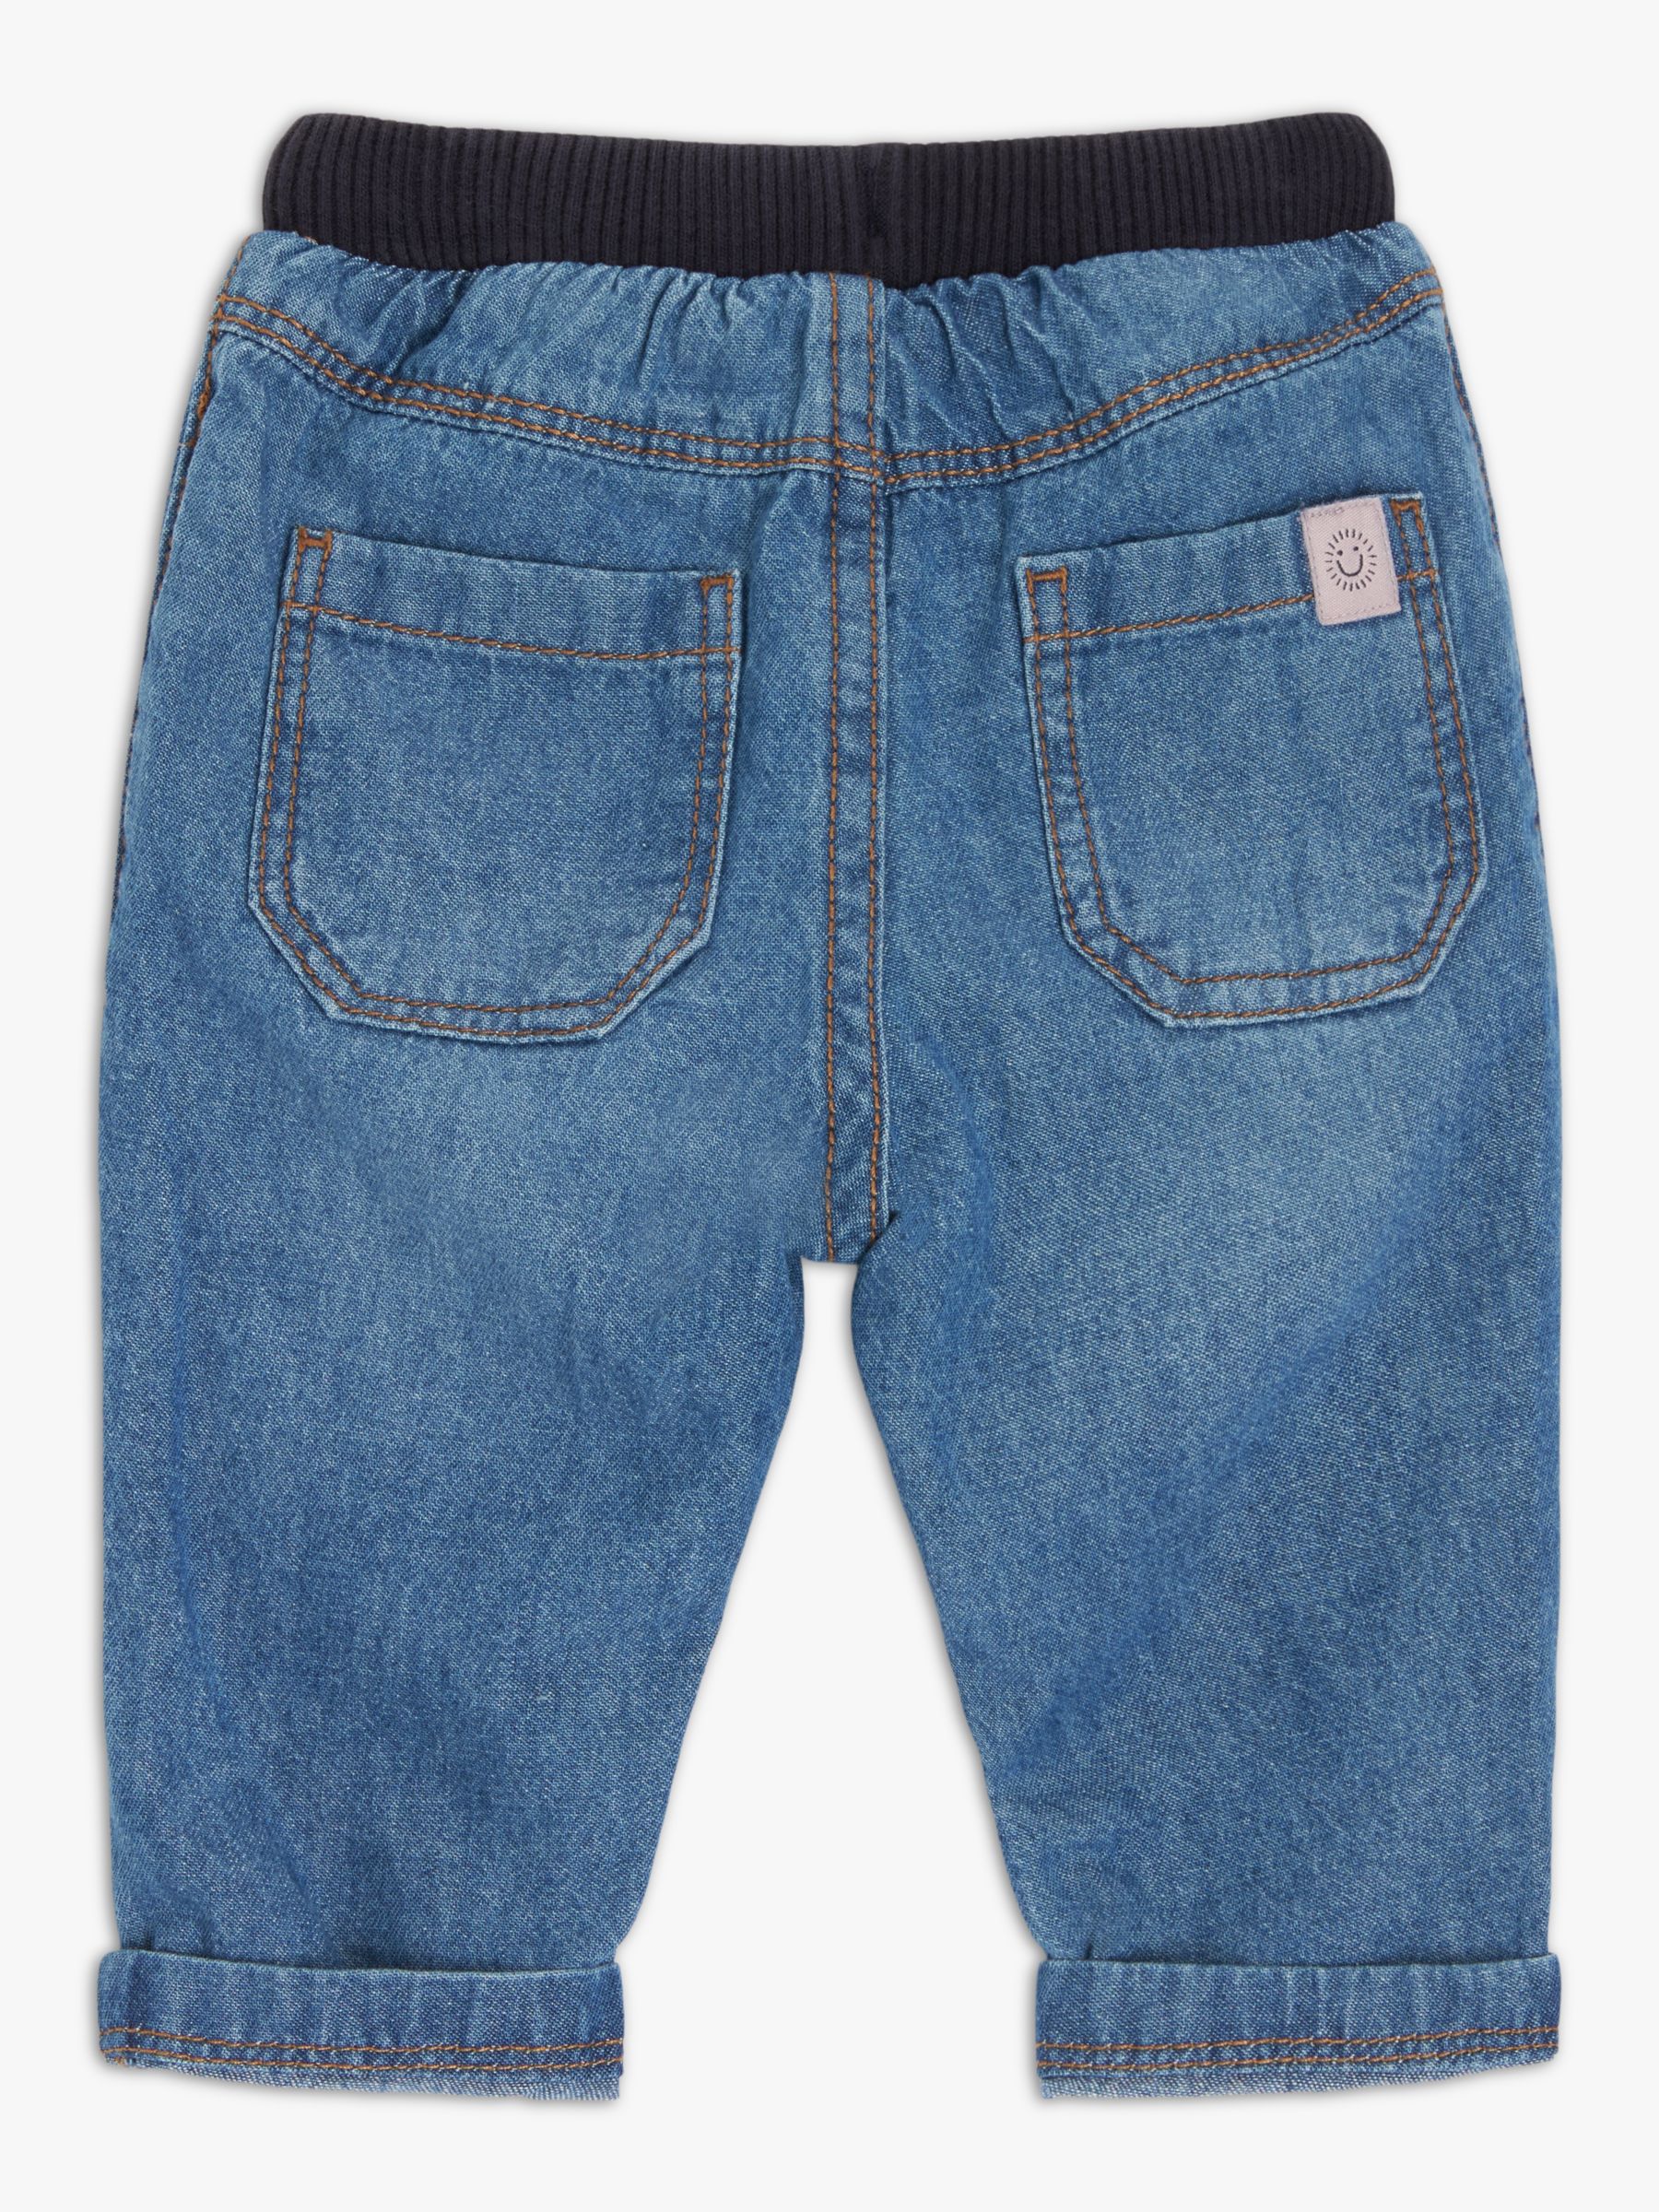 John Lewis Baby Ribbed Waist Jeans, Blue Denim, 2-3 years